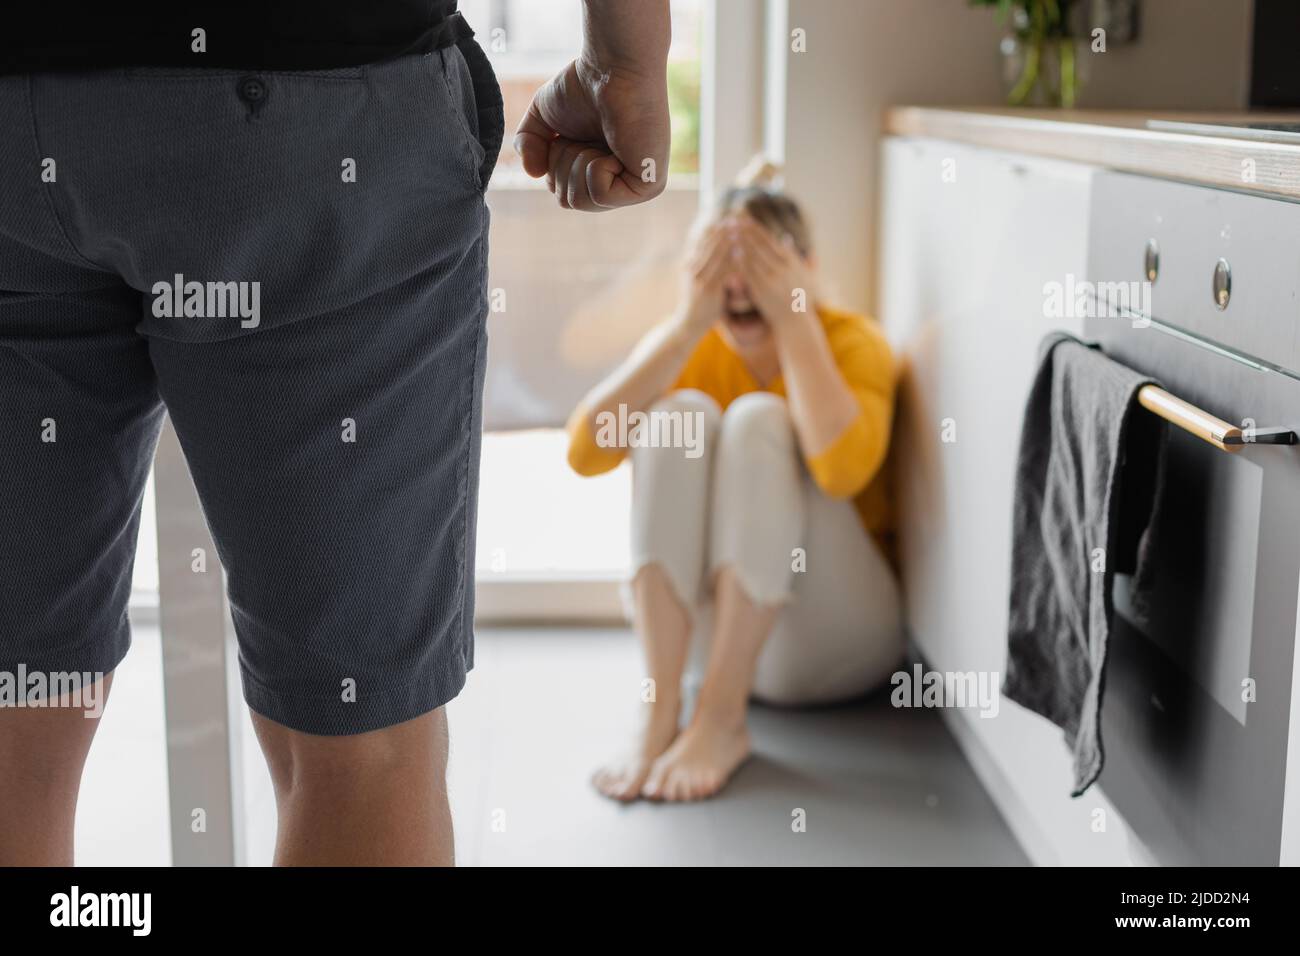 unrecognizable aggressive man clenches his fist tightly, aggression and domestic violence concept Stock Photo